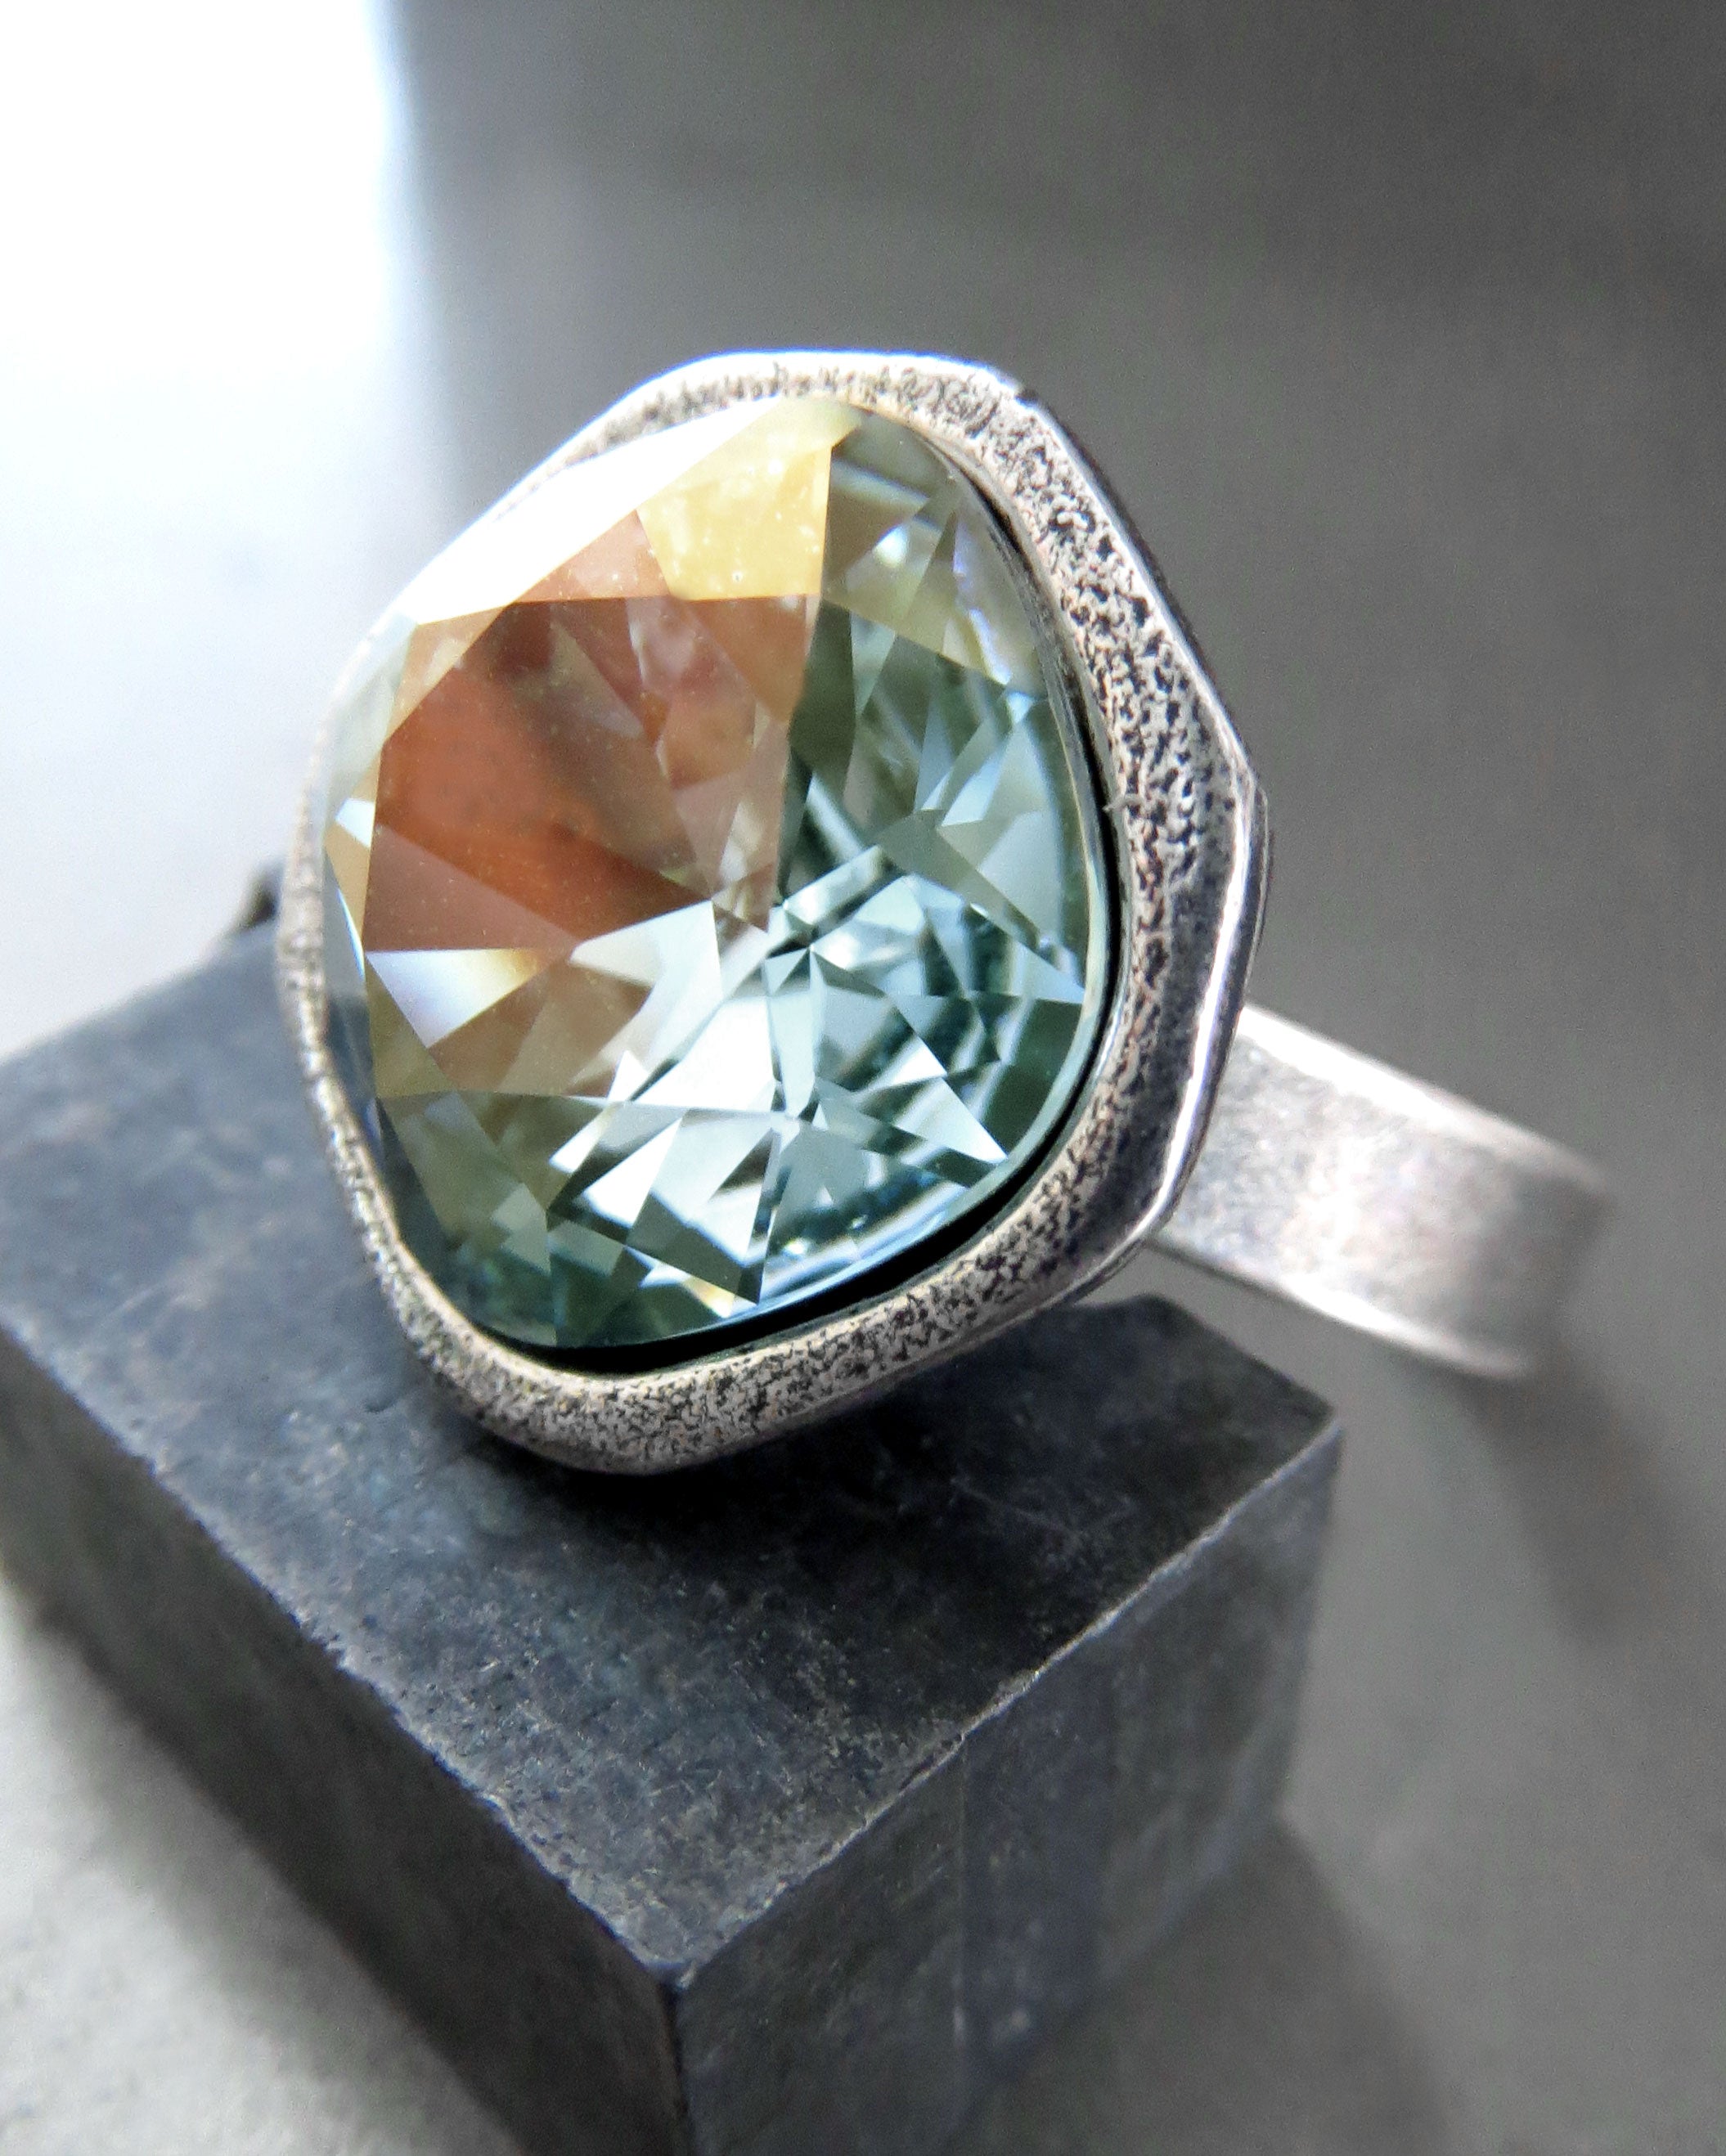 SEAFOAM ICE - Crystal Ring in Soft Seafoam Green and Pale Aqua